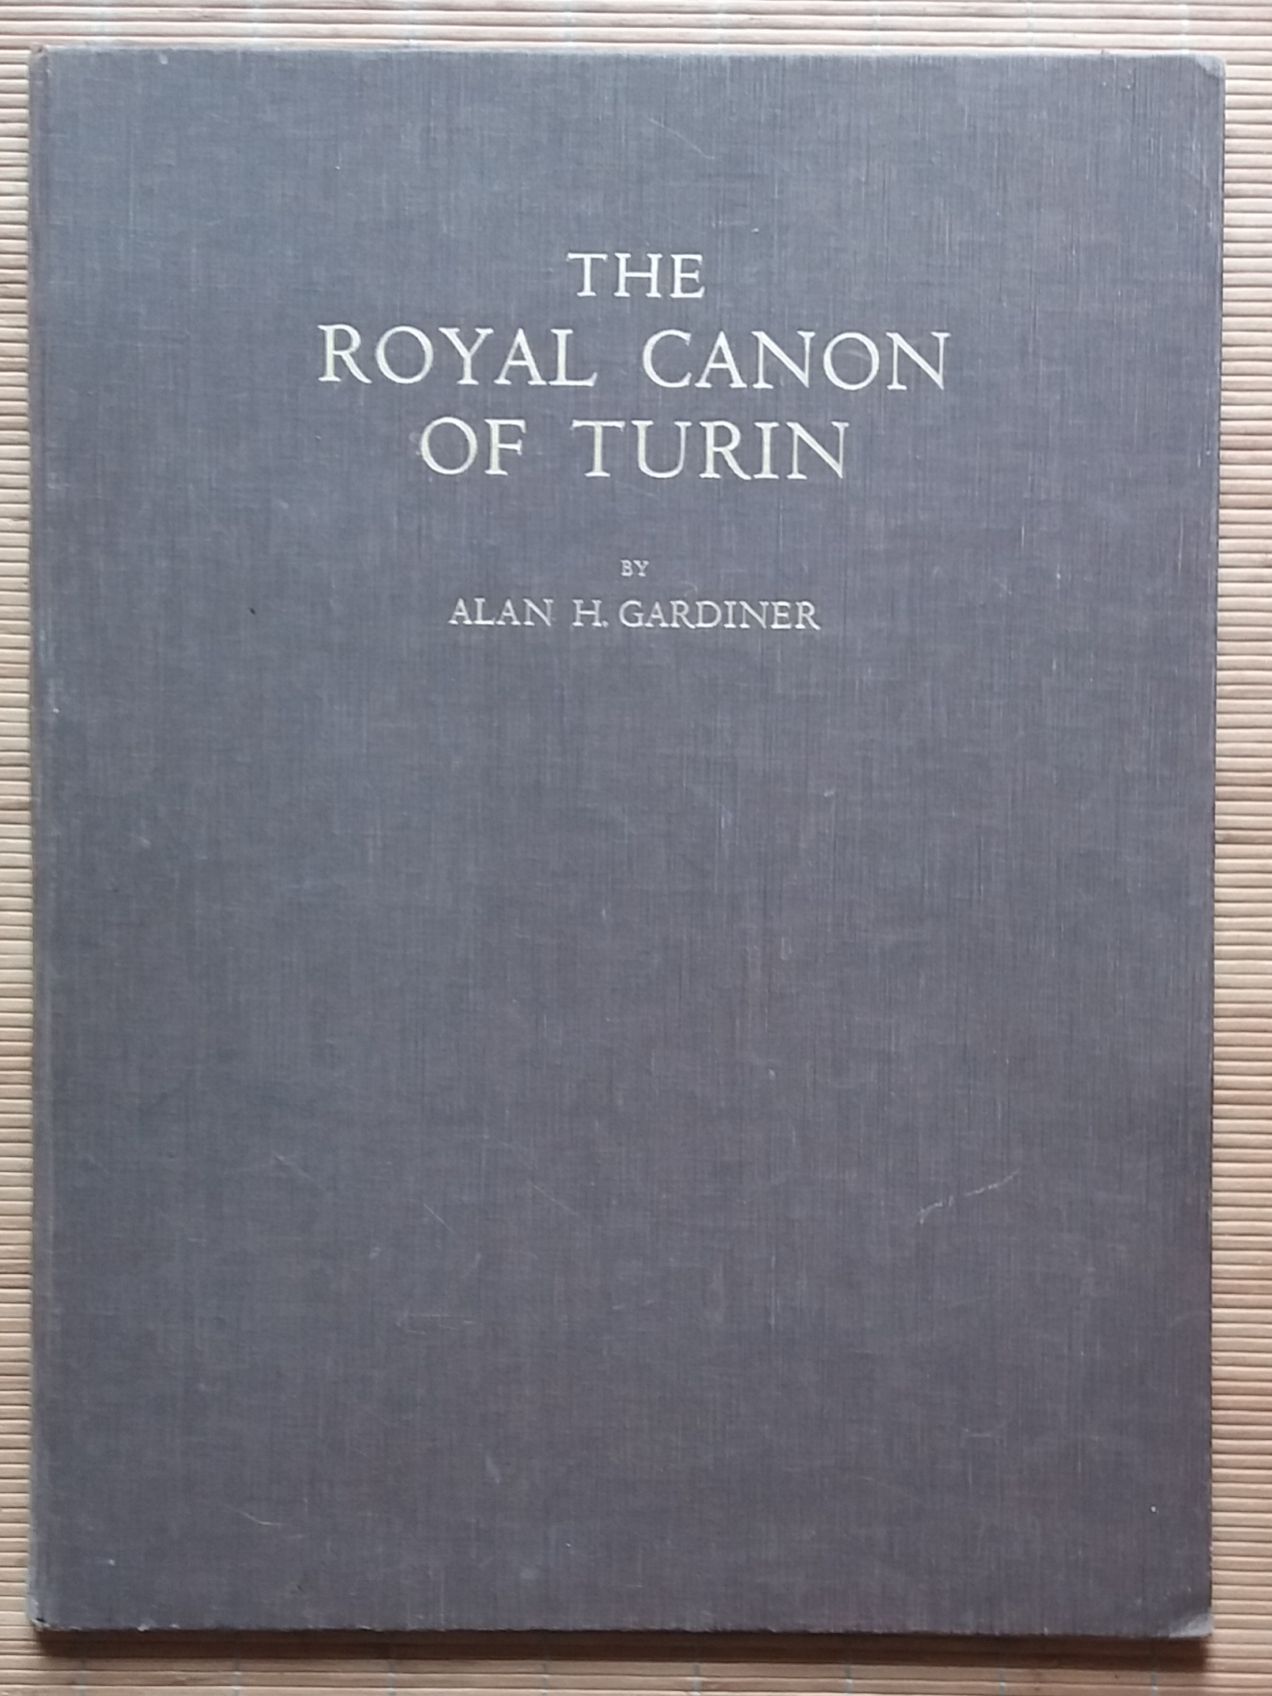 Null [ARCHÉOLOGIE - ÉGYPTOLOGIE]
1 ouvrage.

*The Royal Canon of Turin.
Par Alan&hellip;